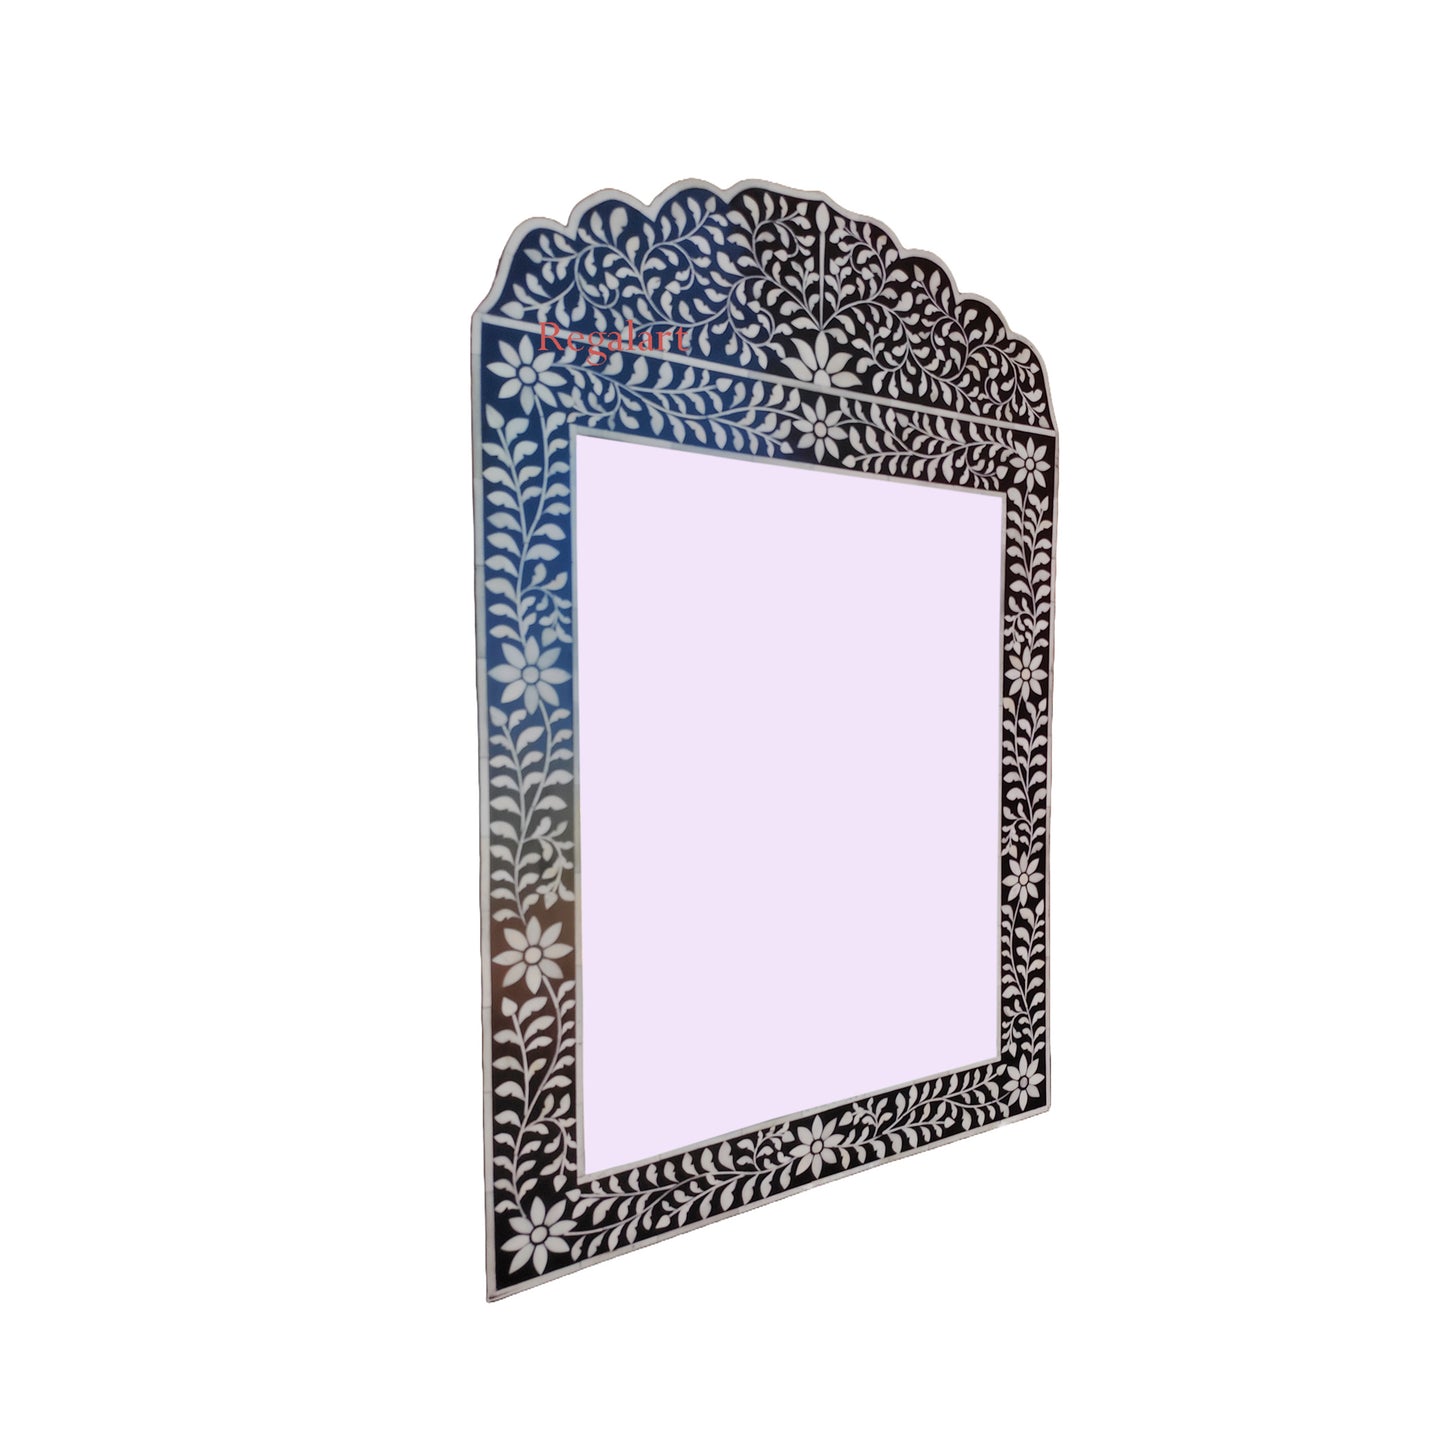 Bone Inlay Wall Hanging Mirror Frame Handmade Floral patten Home Decor Mirror